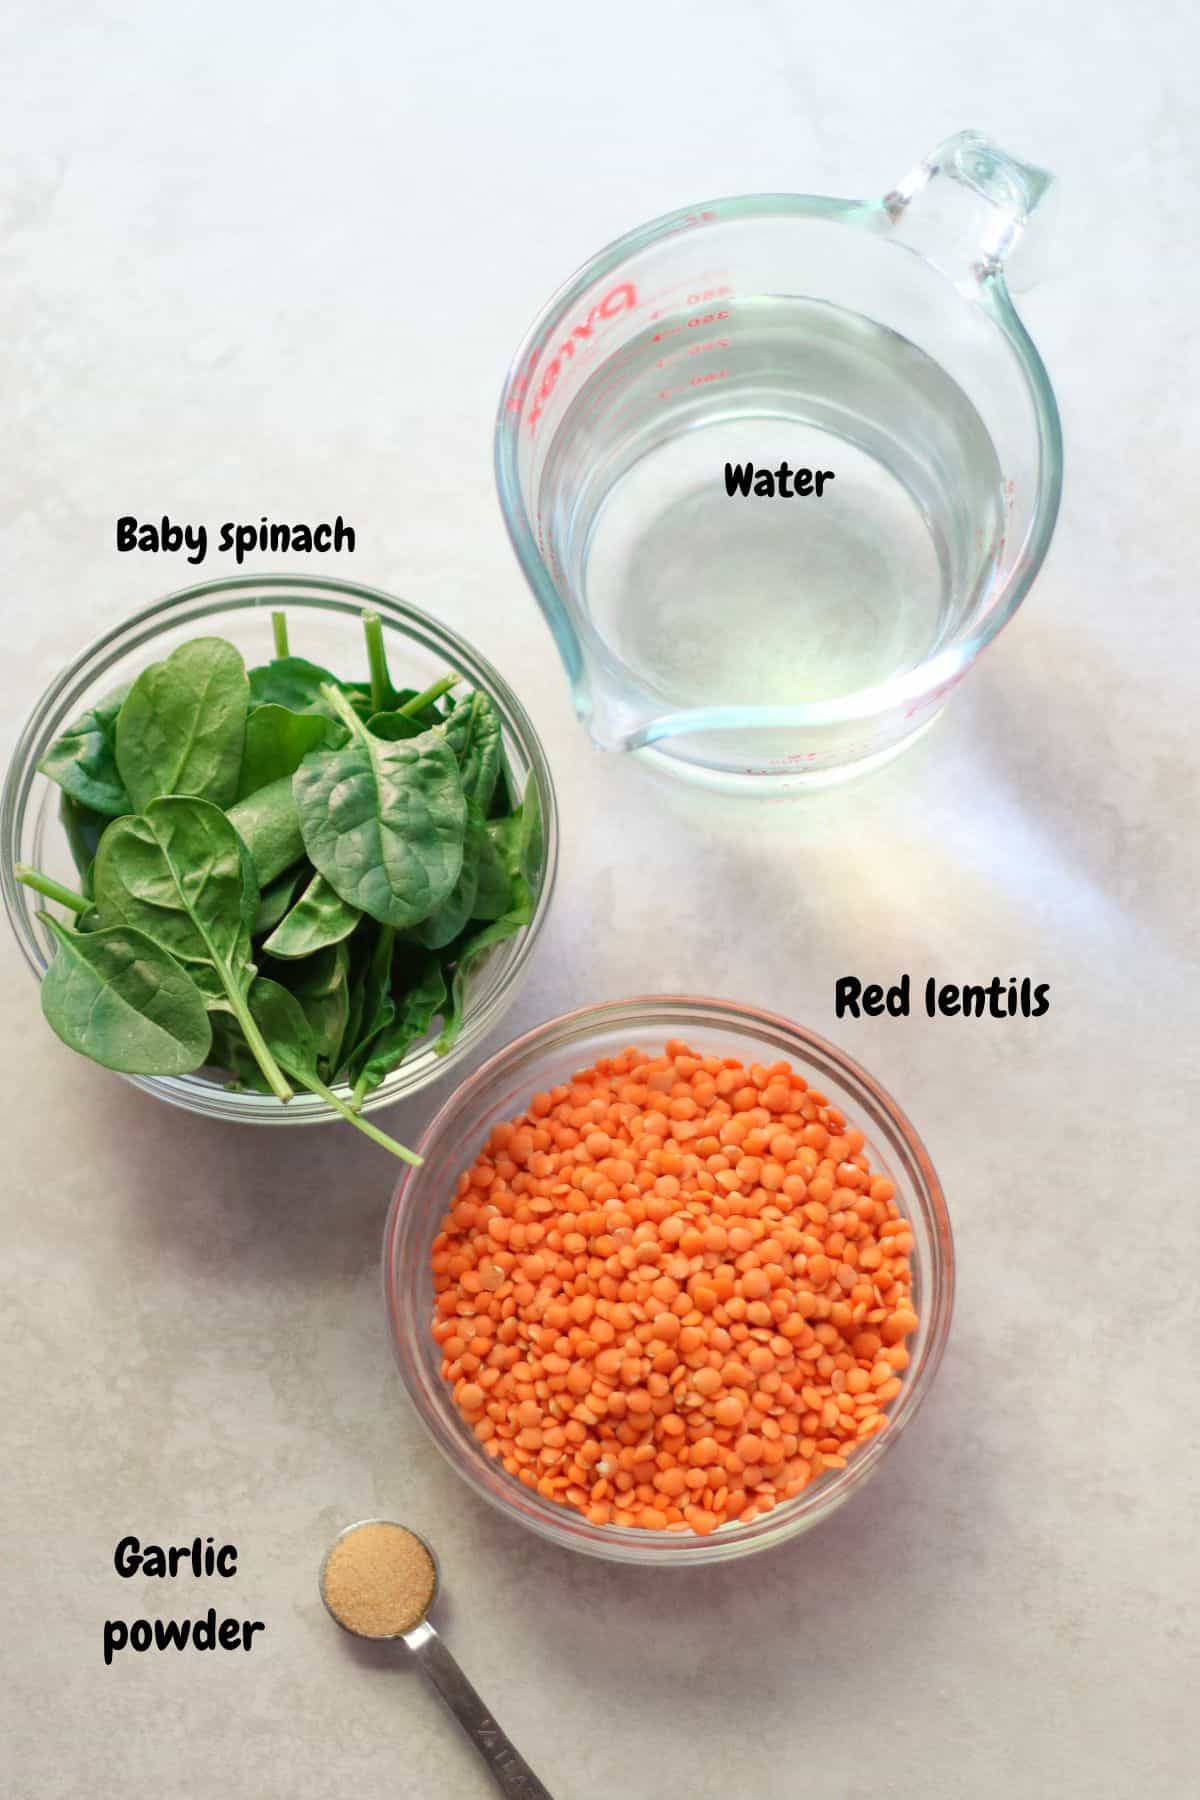 lentils, water, spinach, and garlic powder.